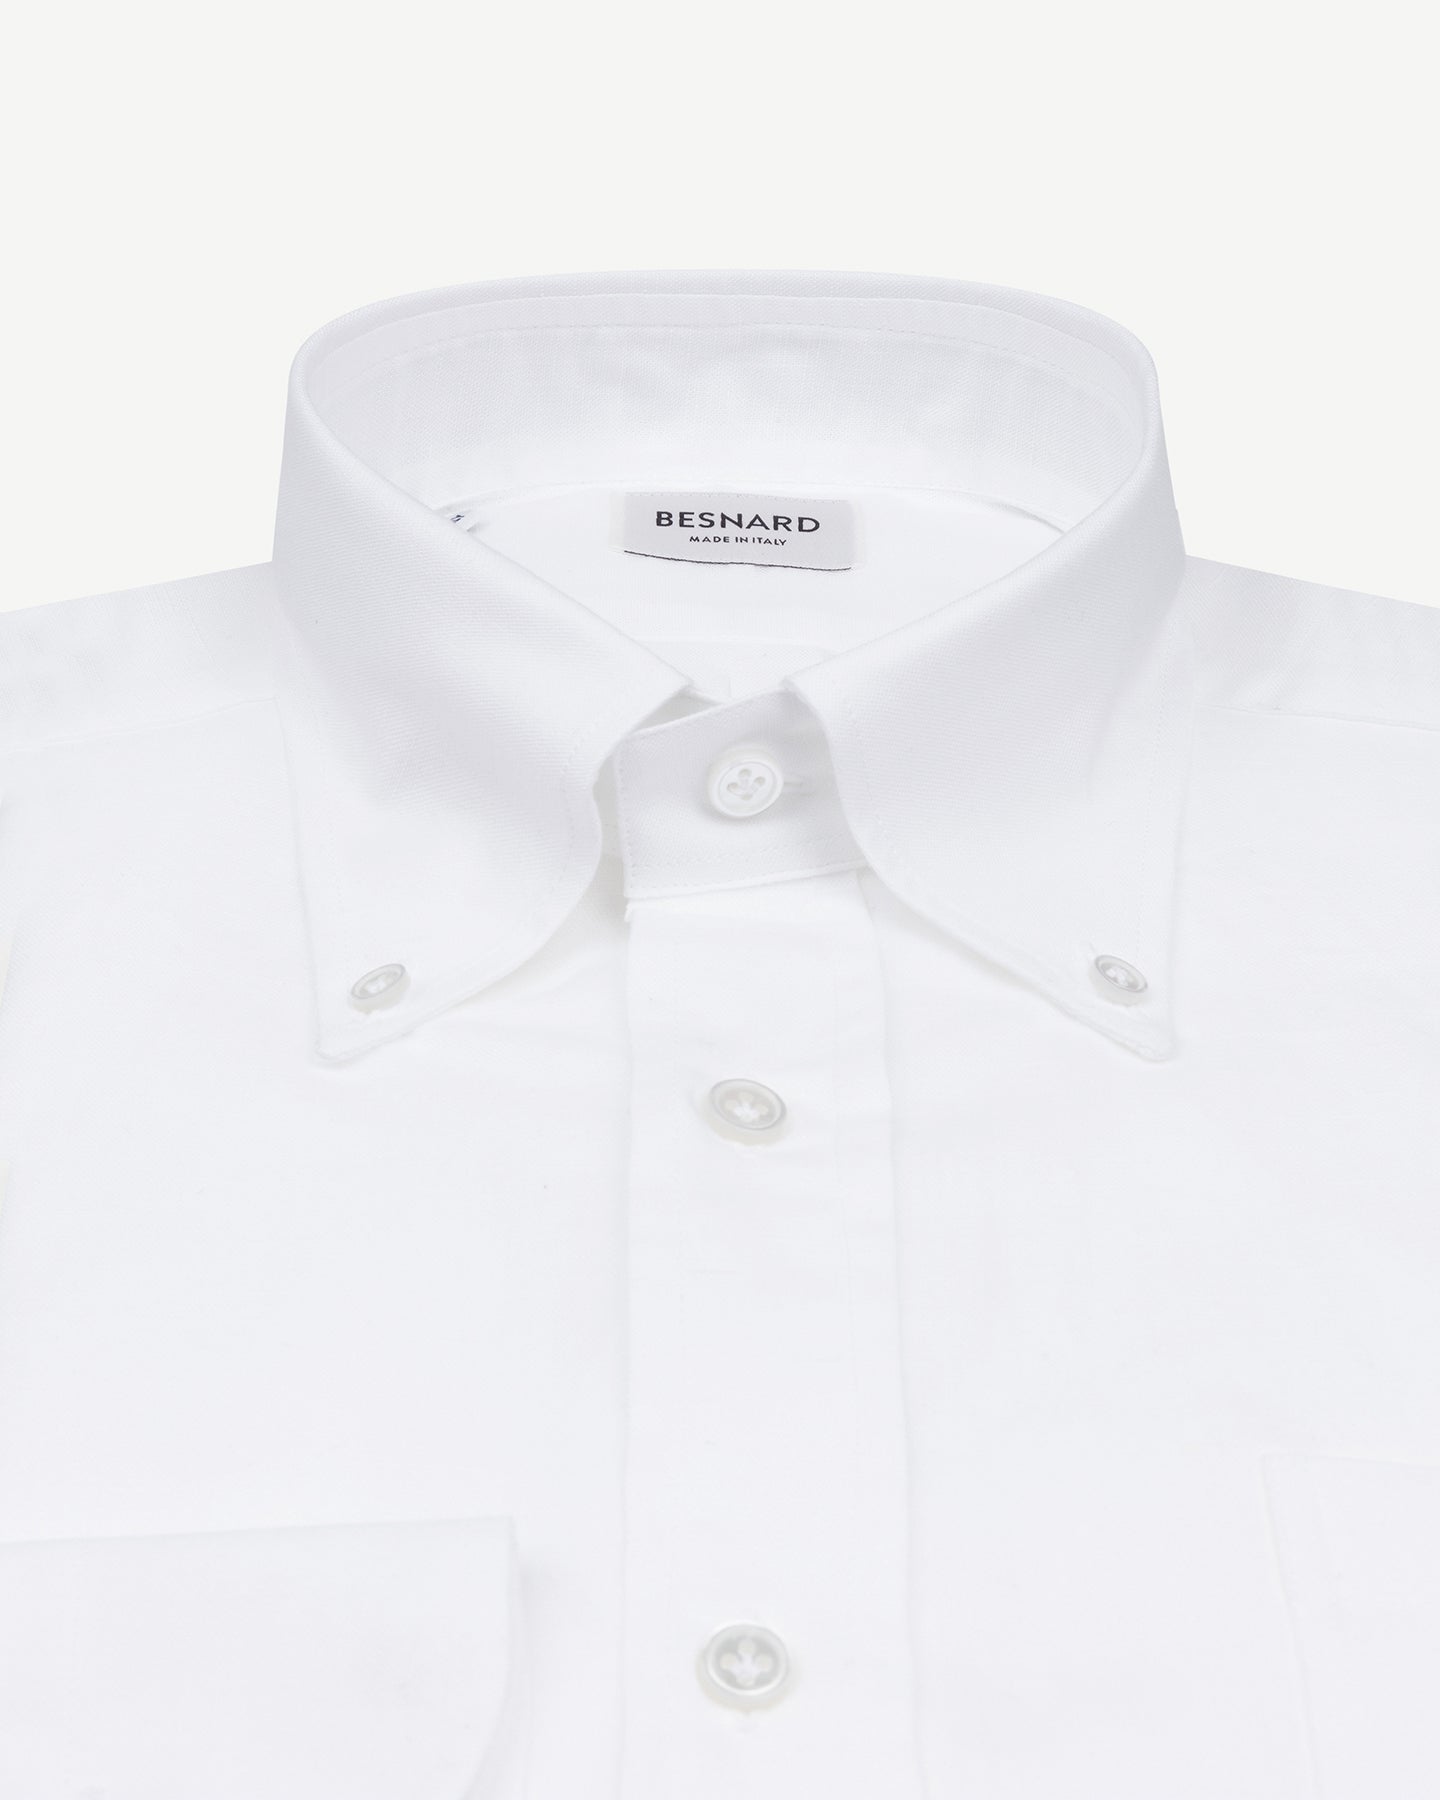 White cotton linen shirt with button down collar